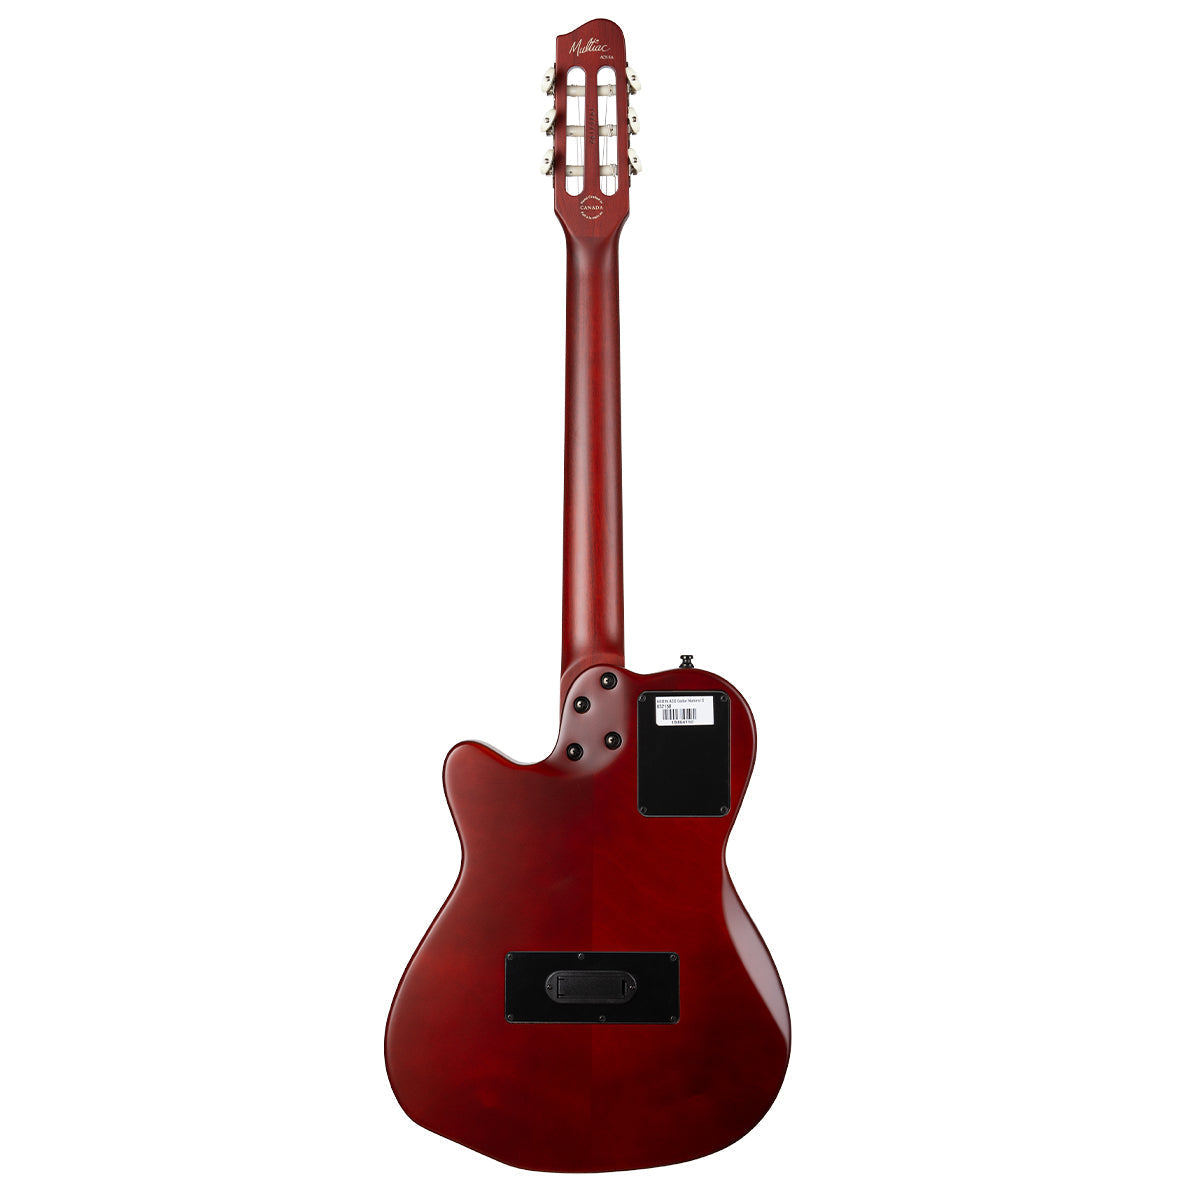 Godin ACS Nylon 2 Voice Guitar ~ Cedar Natural, Electric Guitar for sale at Richards Guitars.